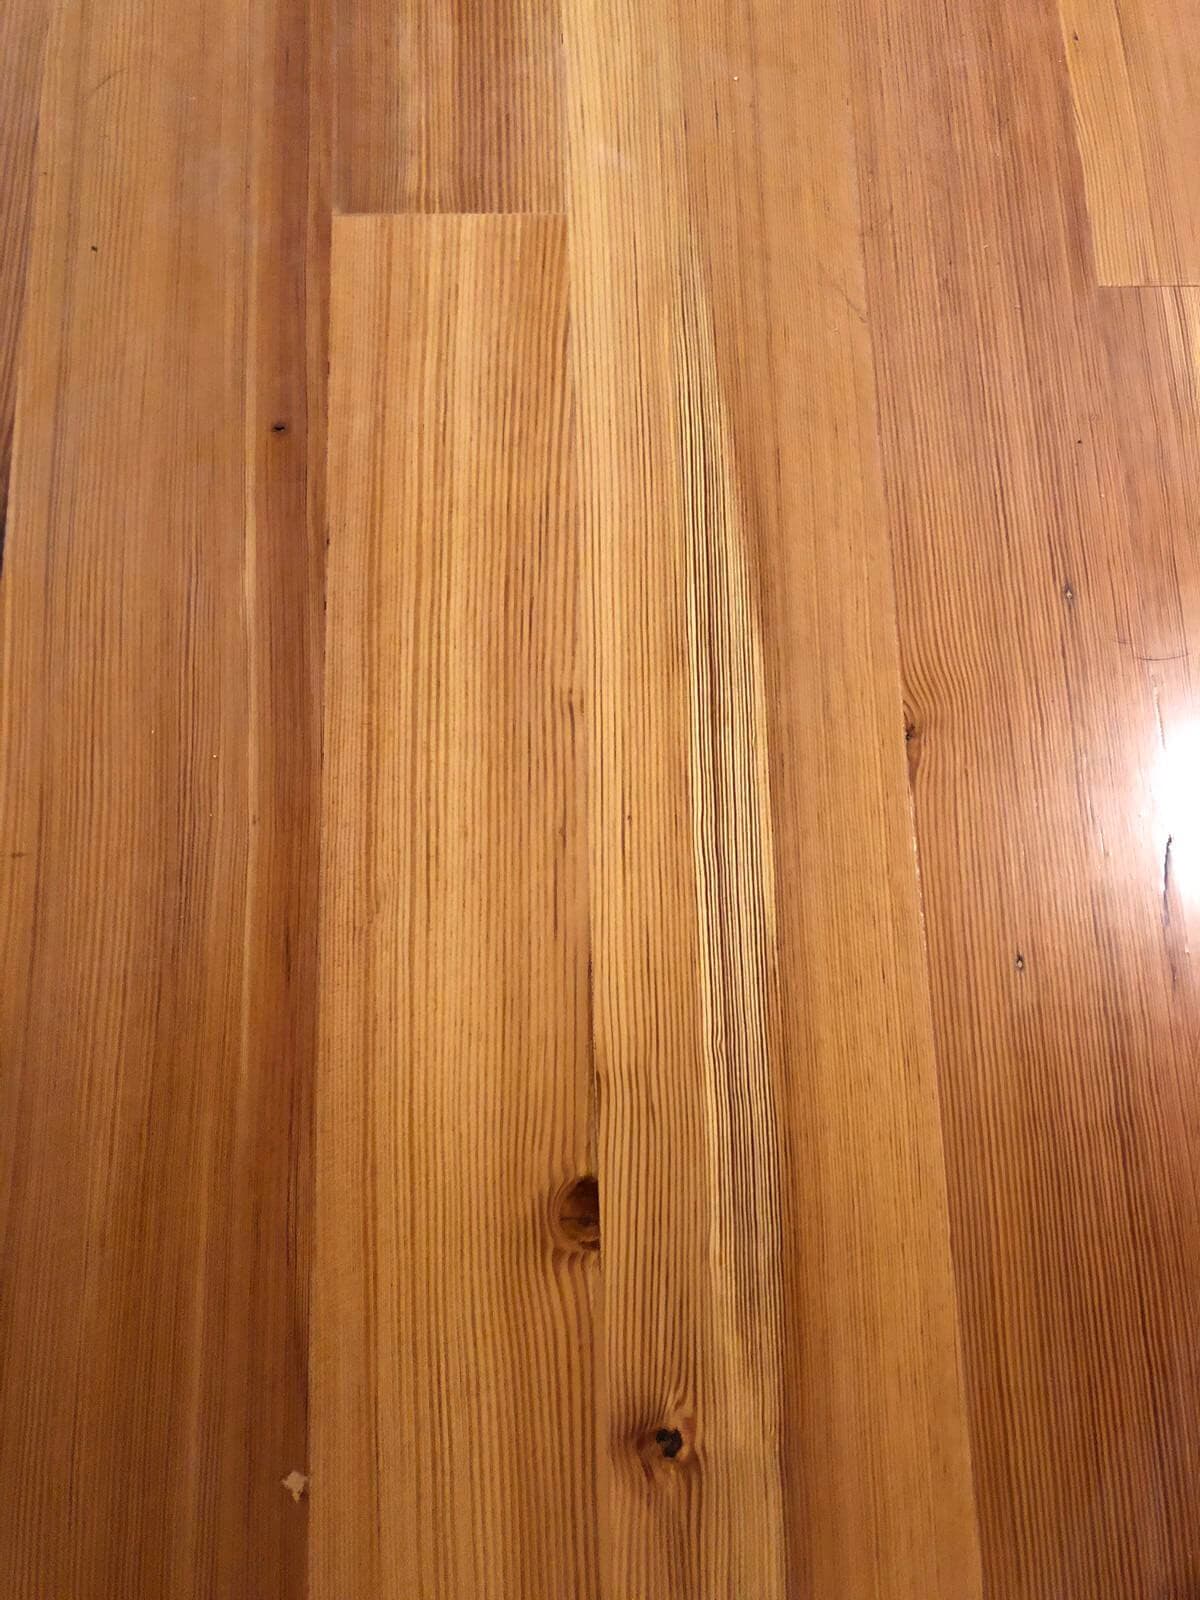 tight vertical grain heart pine floor closeup